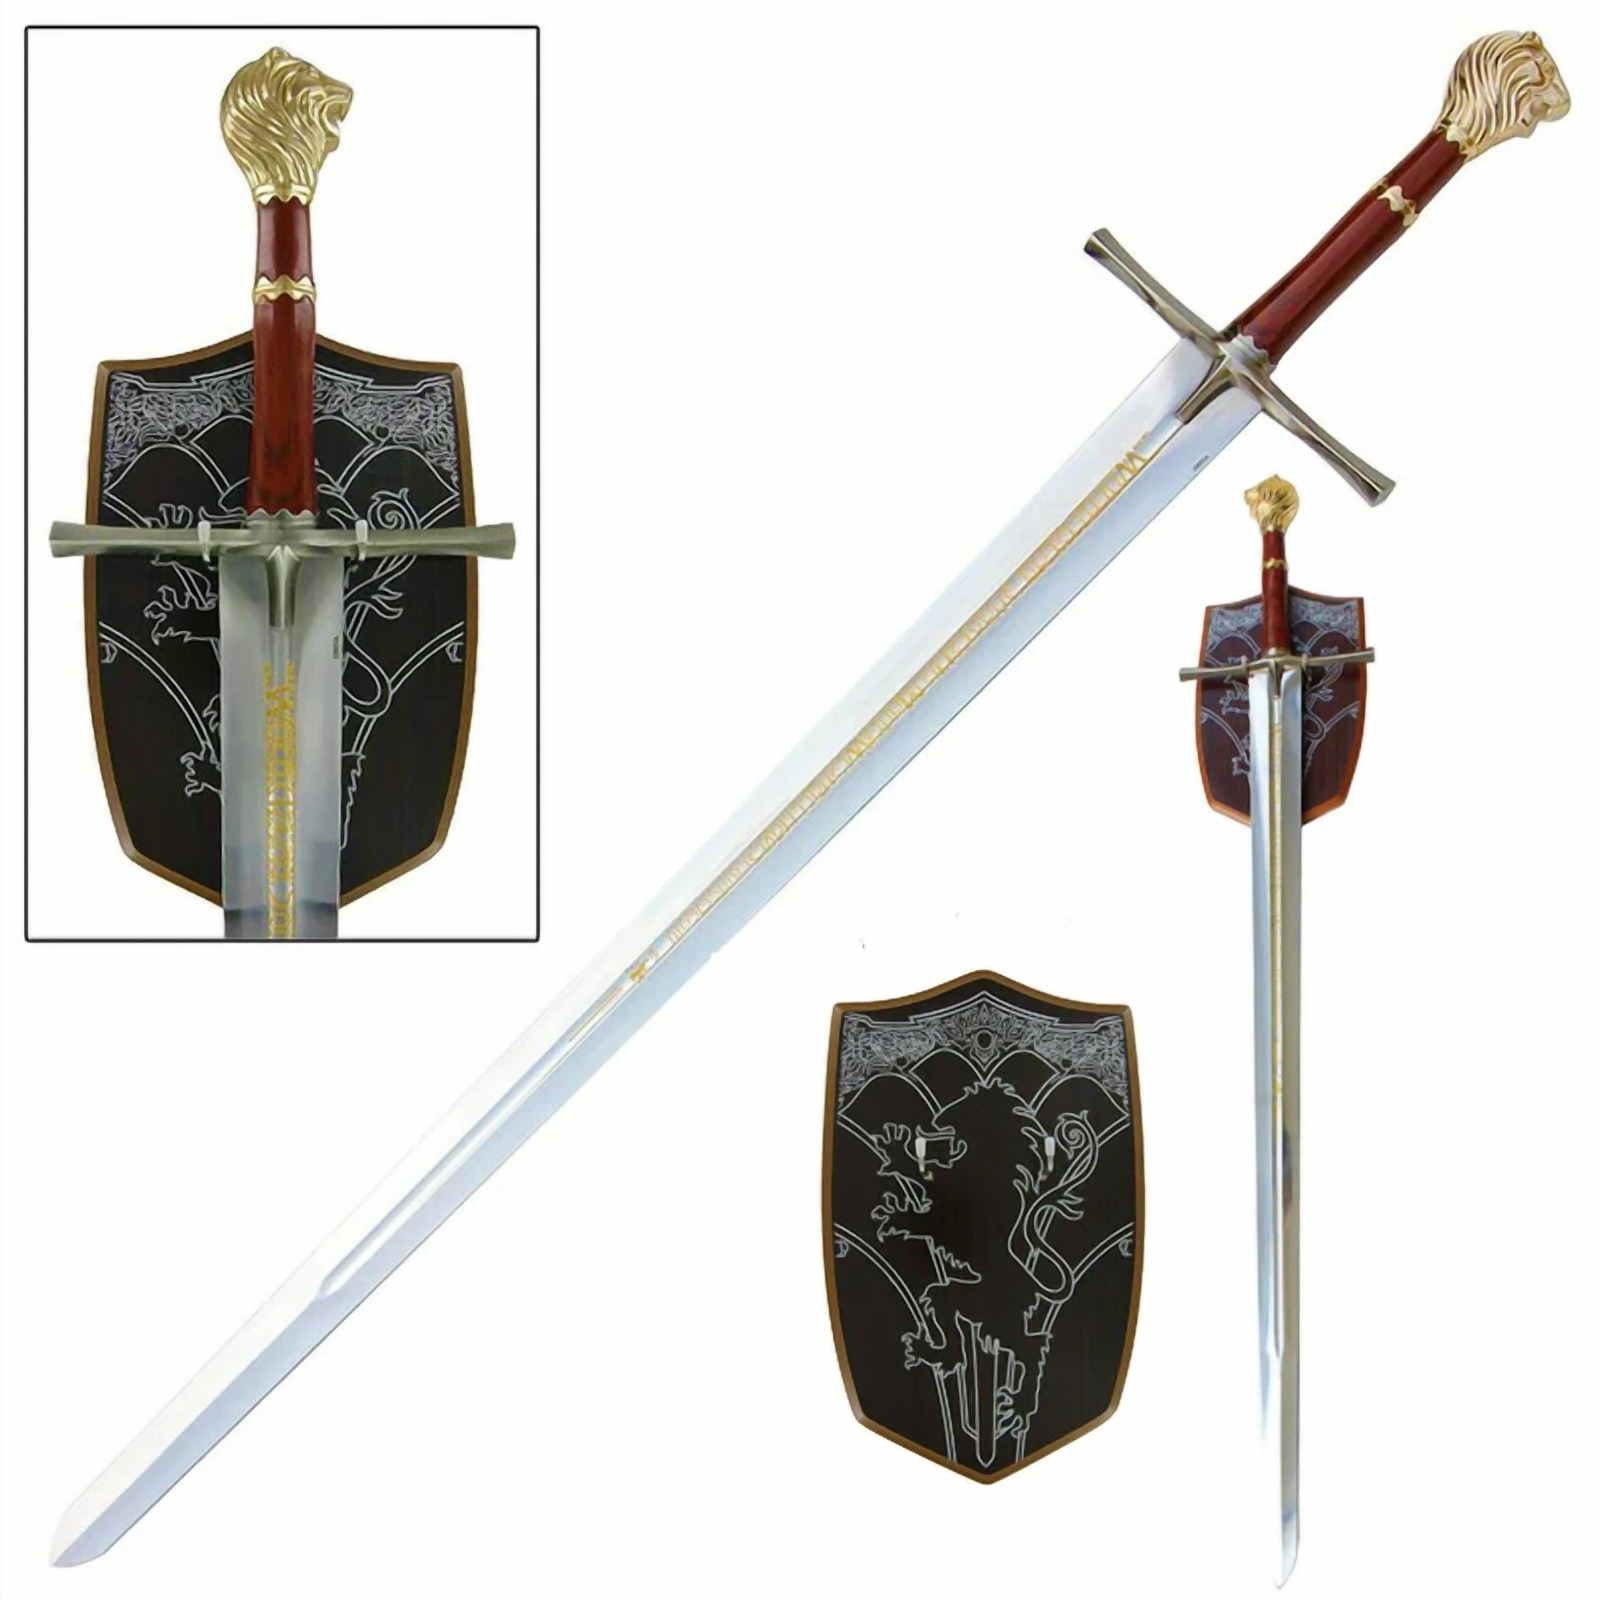 Custom Chronicles of Narnia J2 Steel Sword, Rhindon Peter Sword, Gift Sword.